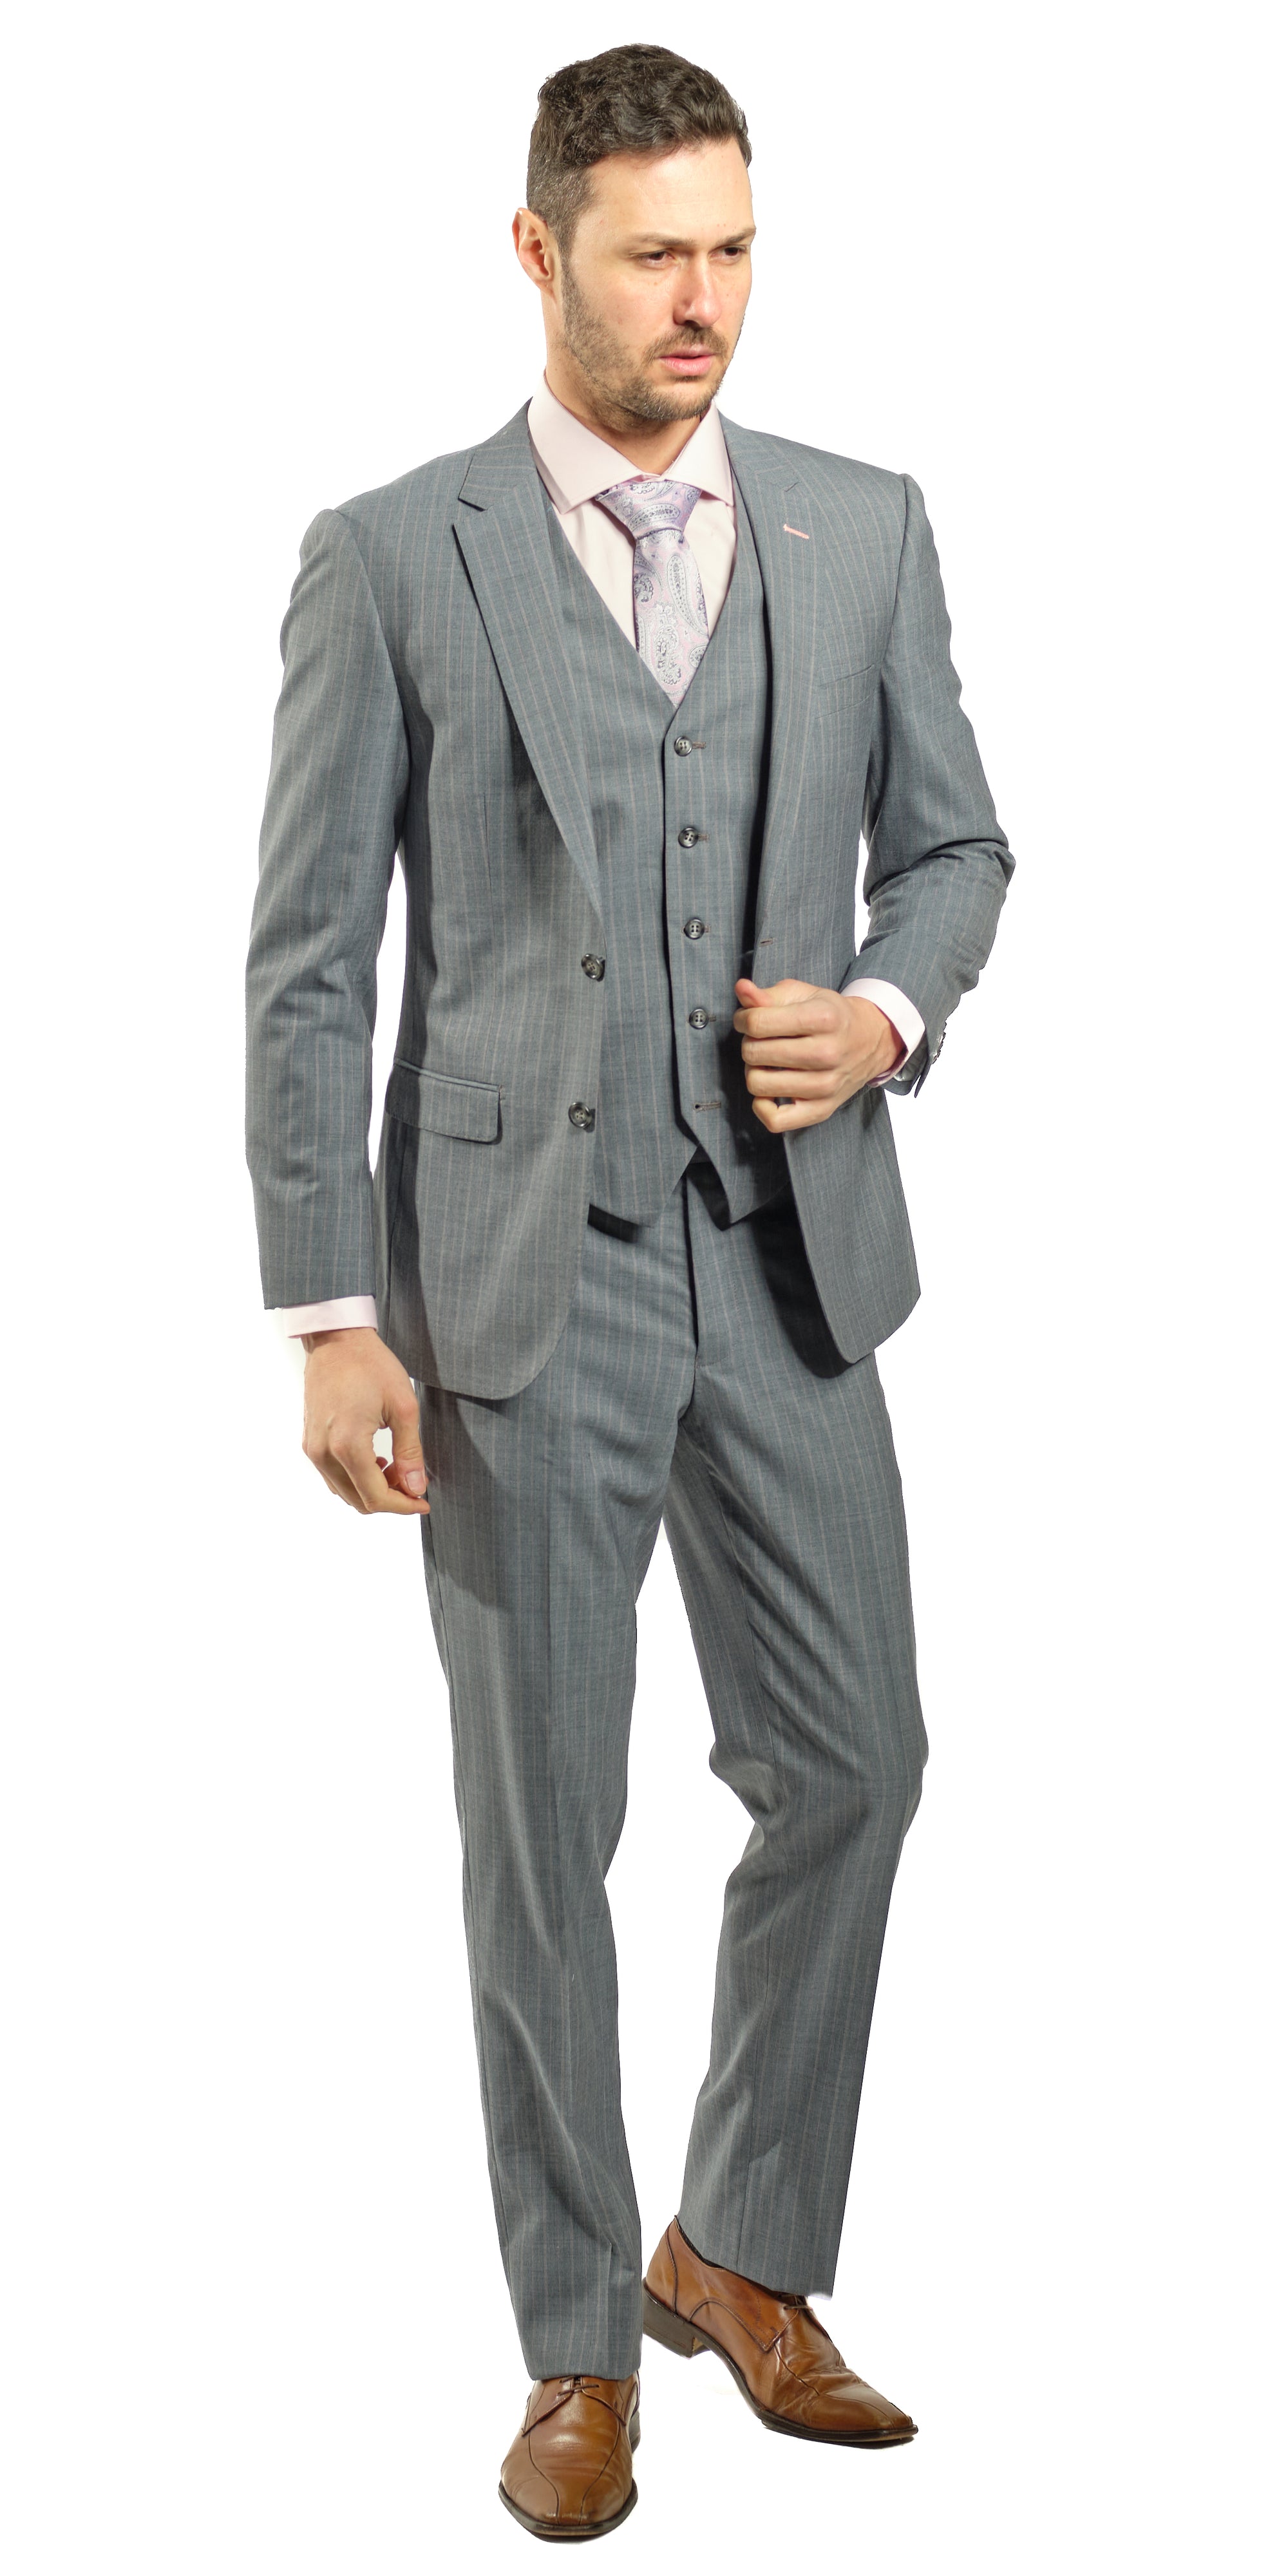 Grey Pink Stripe 3-Piece Suit-The Suit Spot-Wedding Suits-Wedding Tuxedos-Groomsmen Suits-Groomsmen Tuxedos-Slim Fit Suits-Slim Fit Tuxedos-Online wedding suits